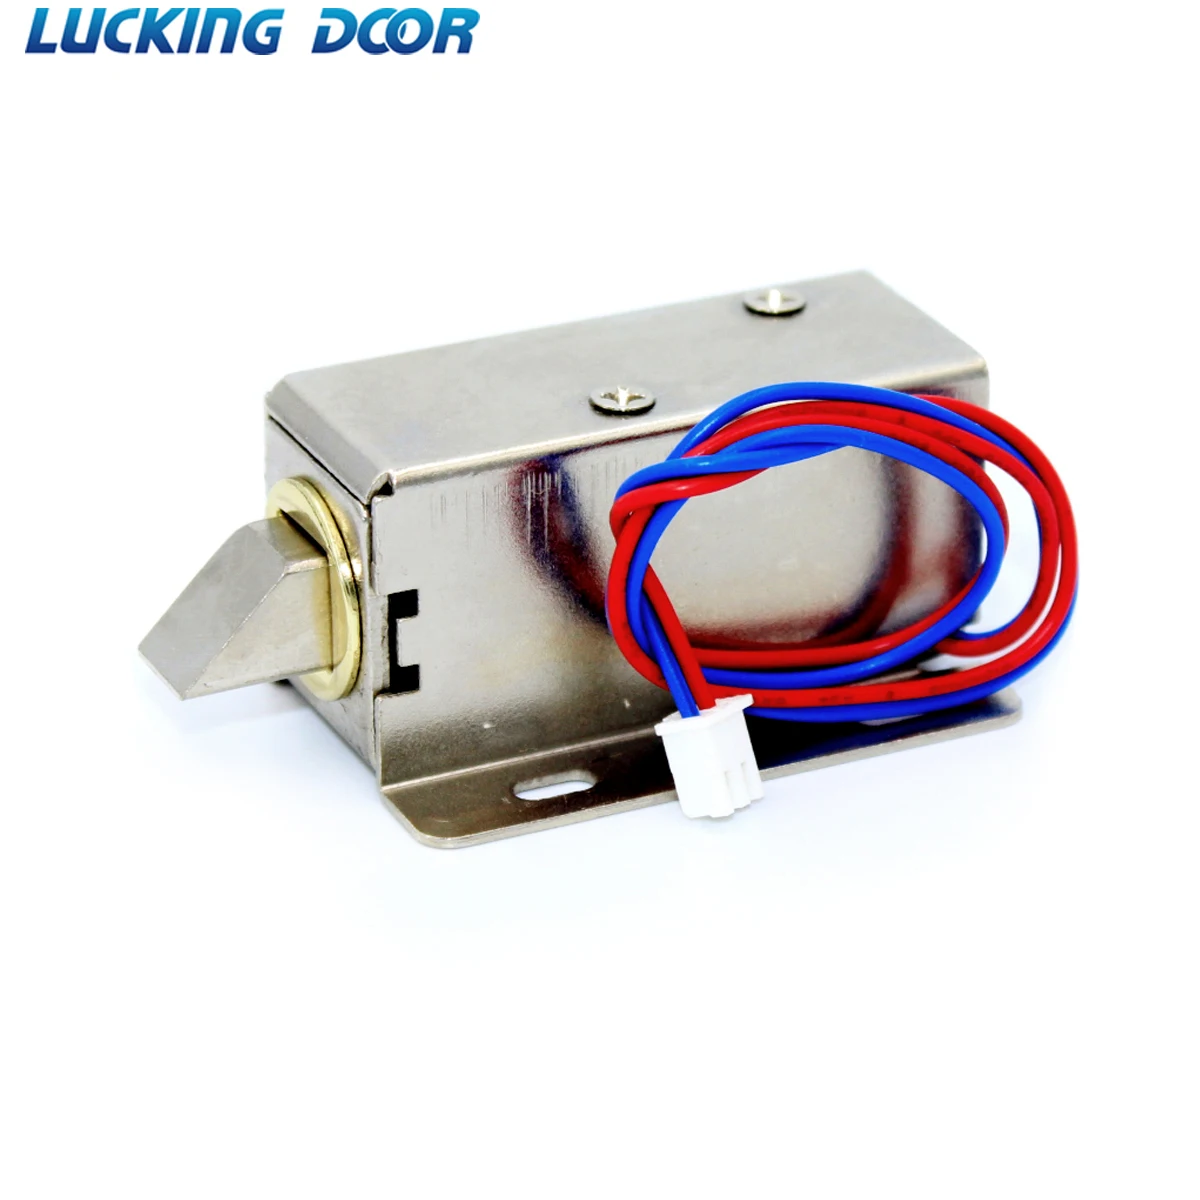 Details about   Premium Electric Lock DC 12V Door Access Control Cabinet Gate Downwards Bolt 